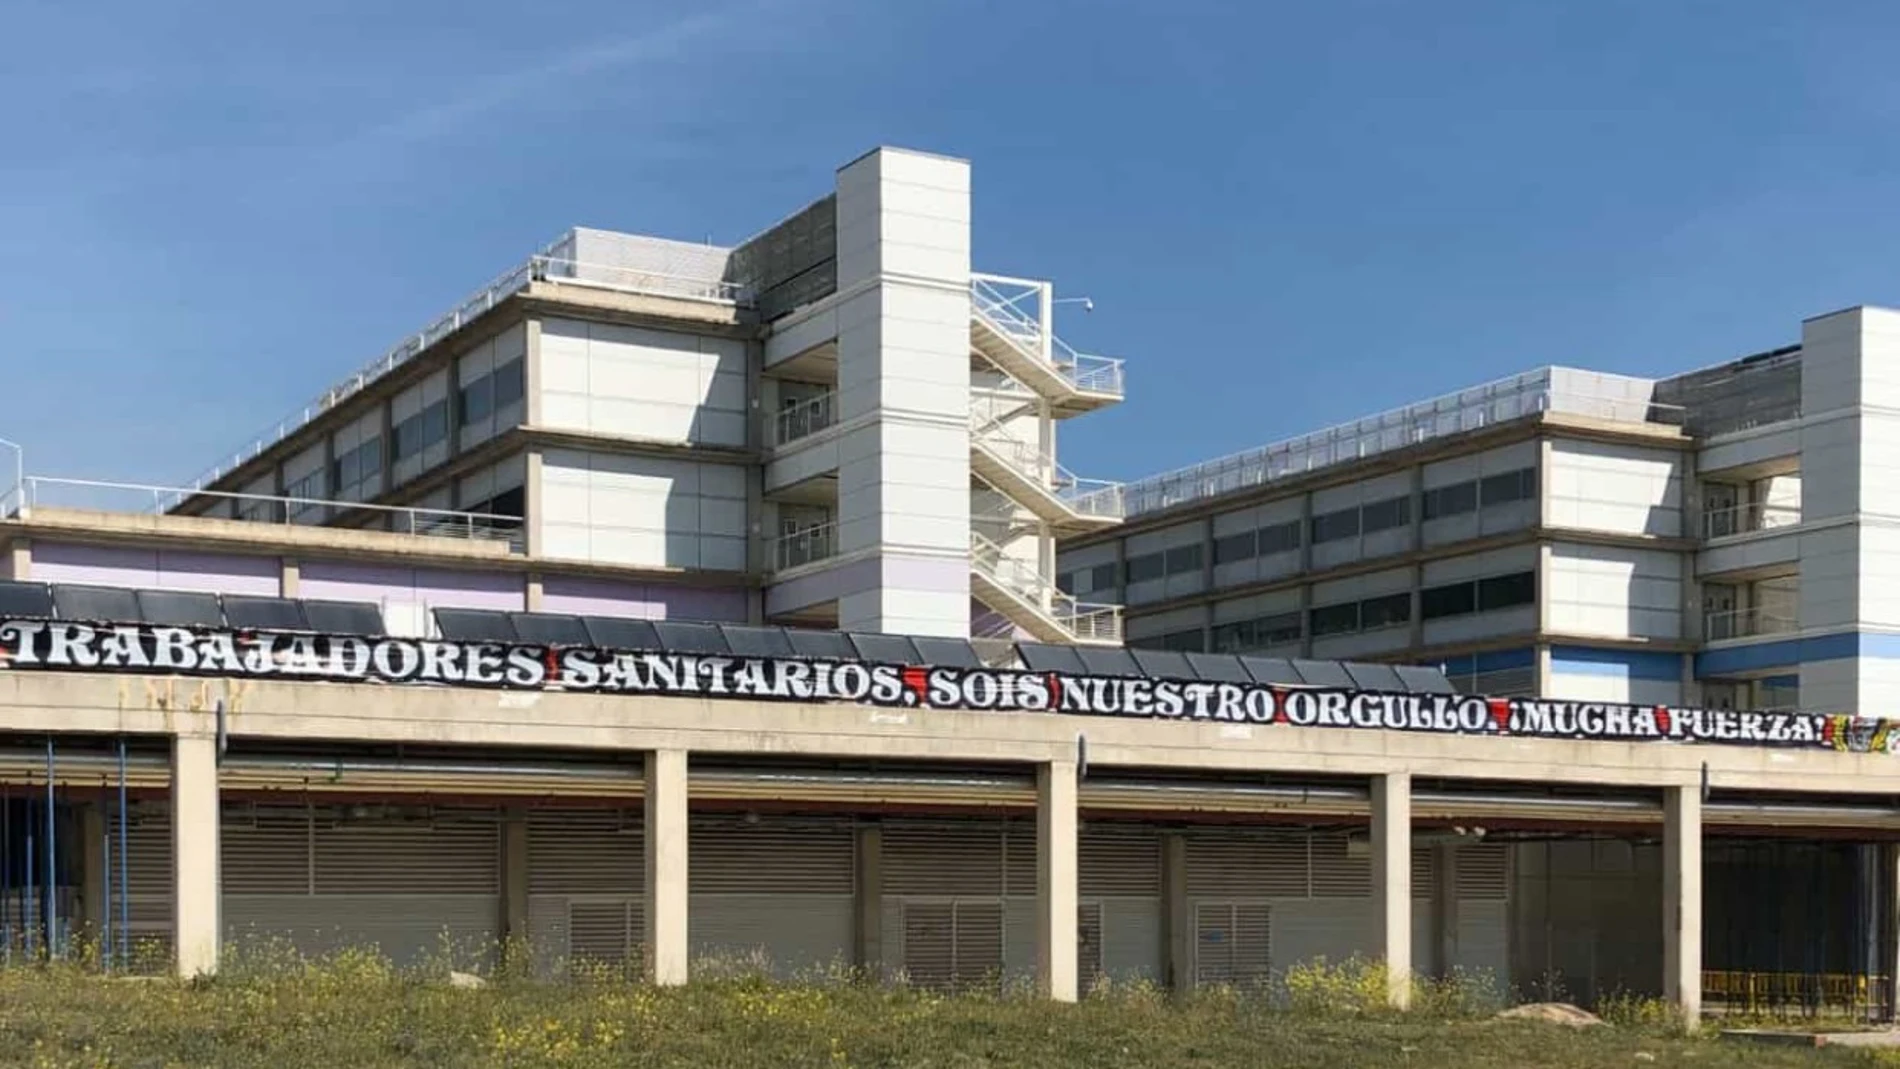 Hospital Infanta Leonor de Vallecas